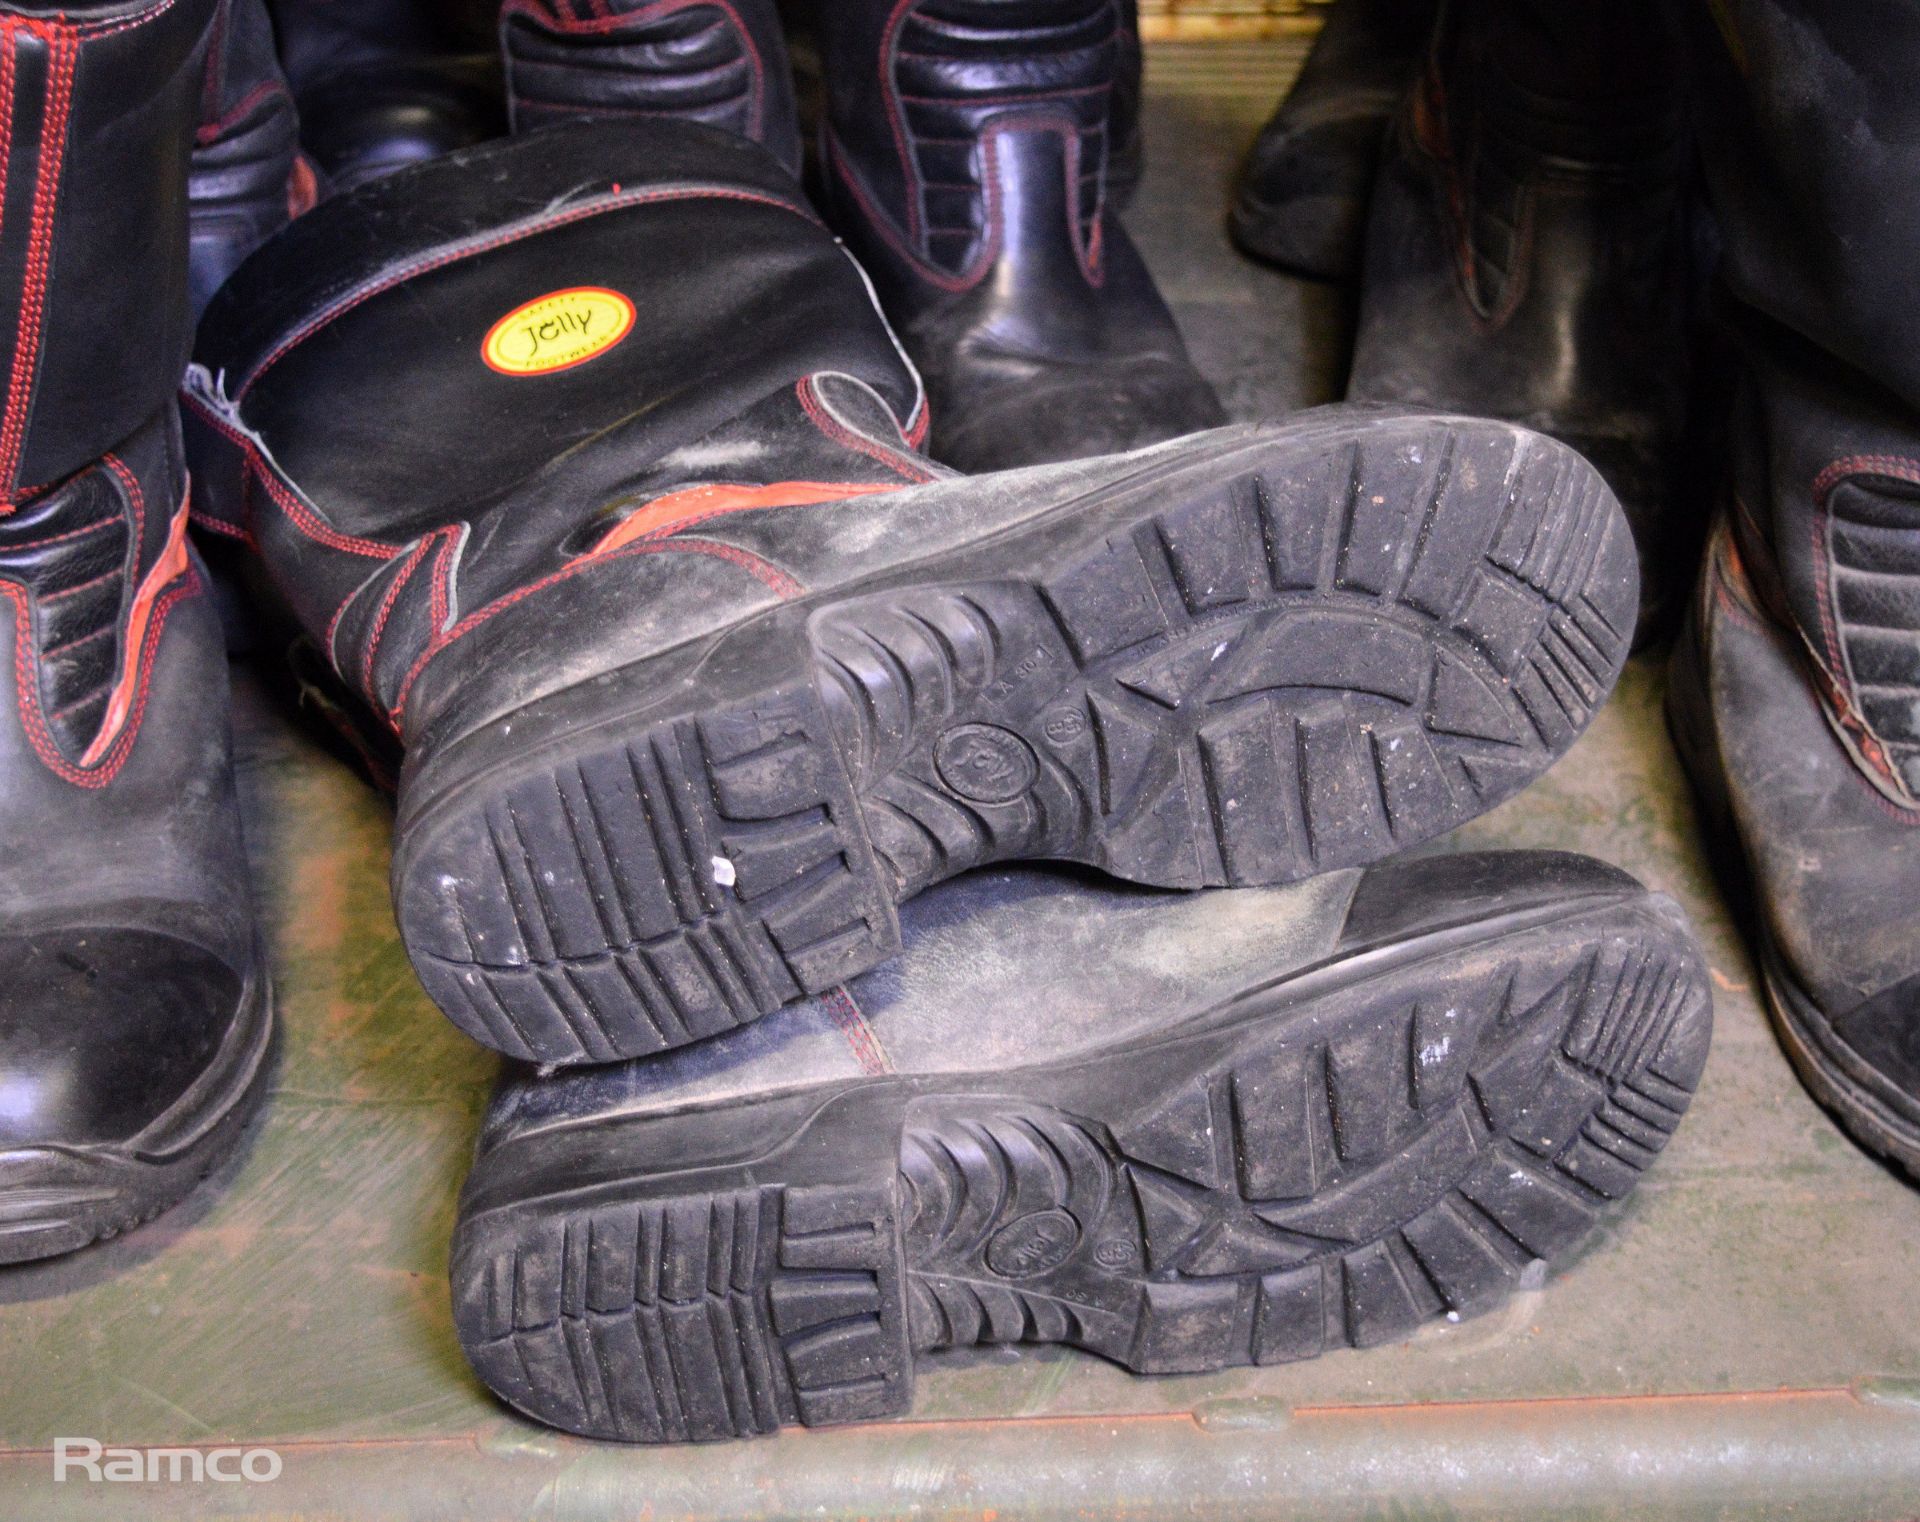 12x Jollys Safety Footwear 45B - Image 3 of 3